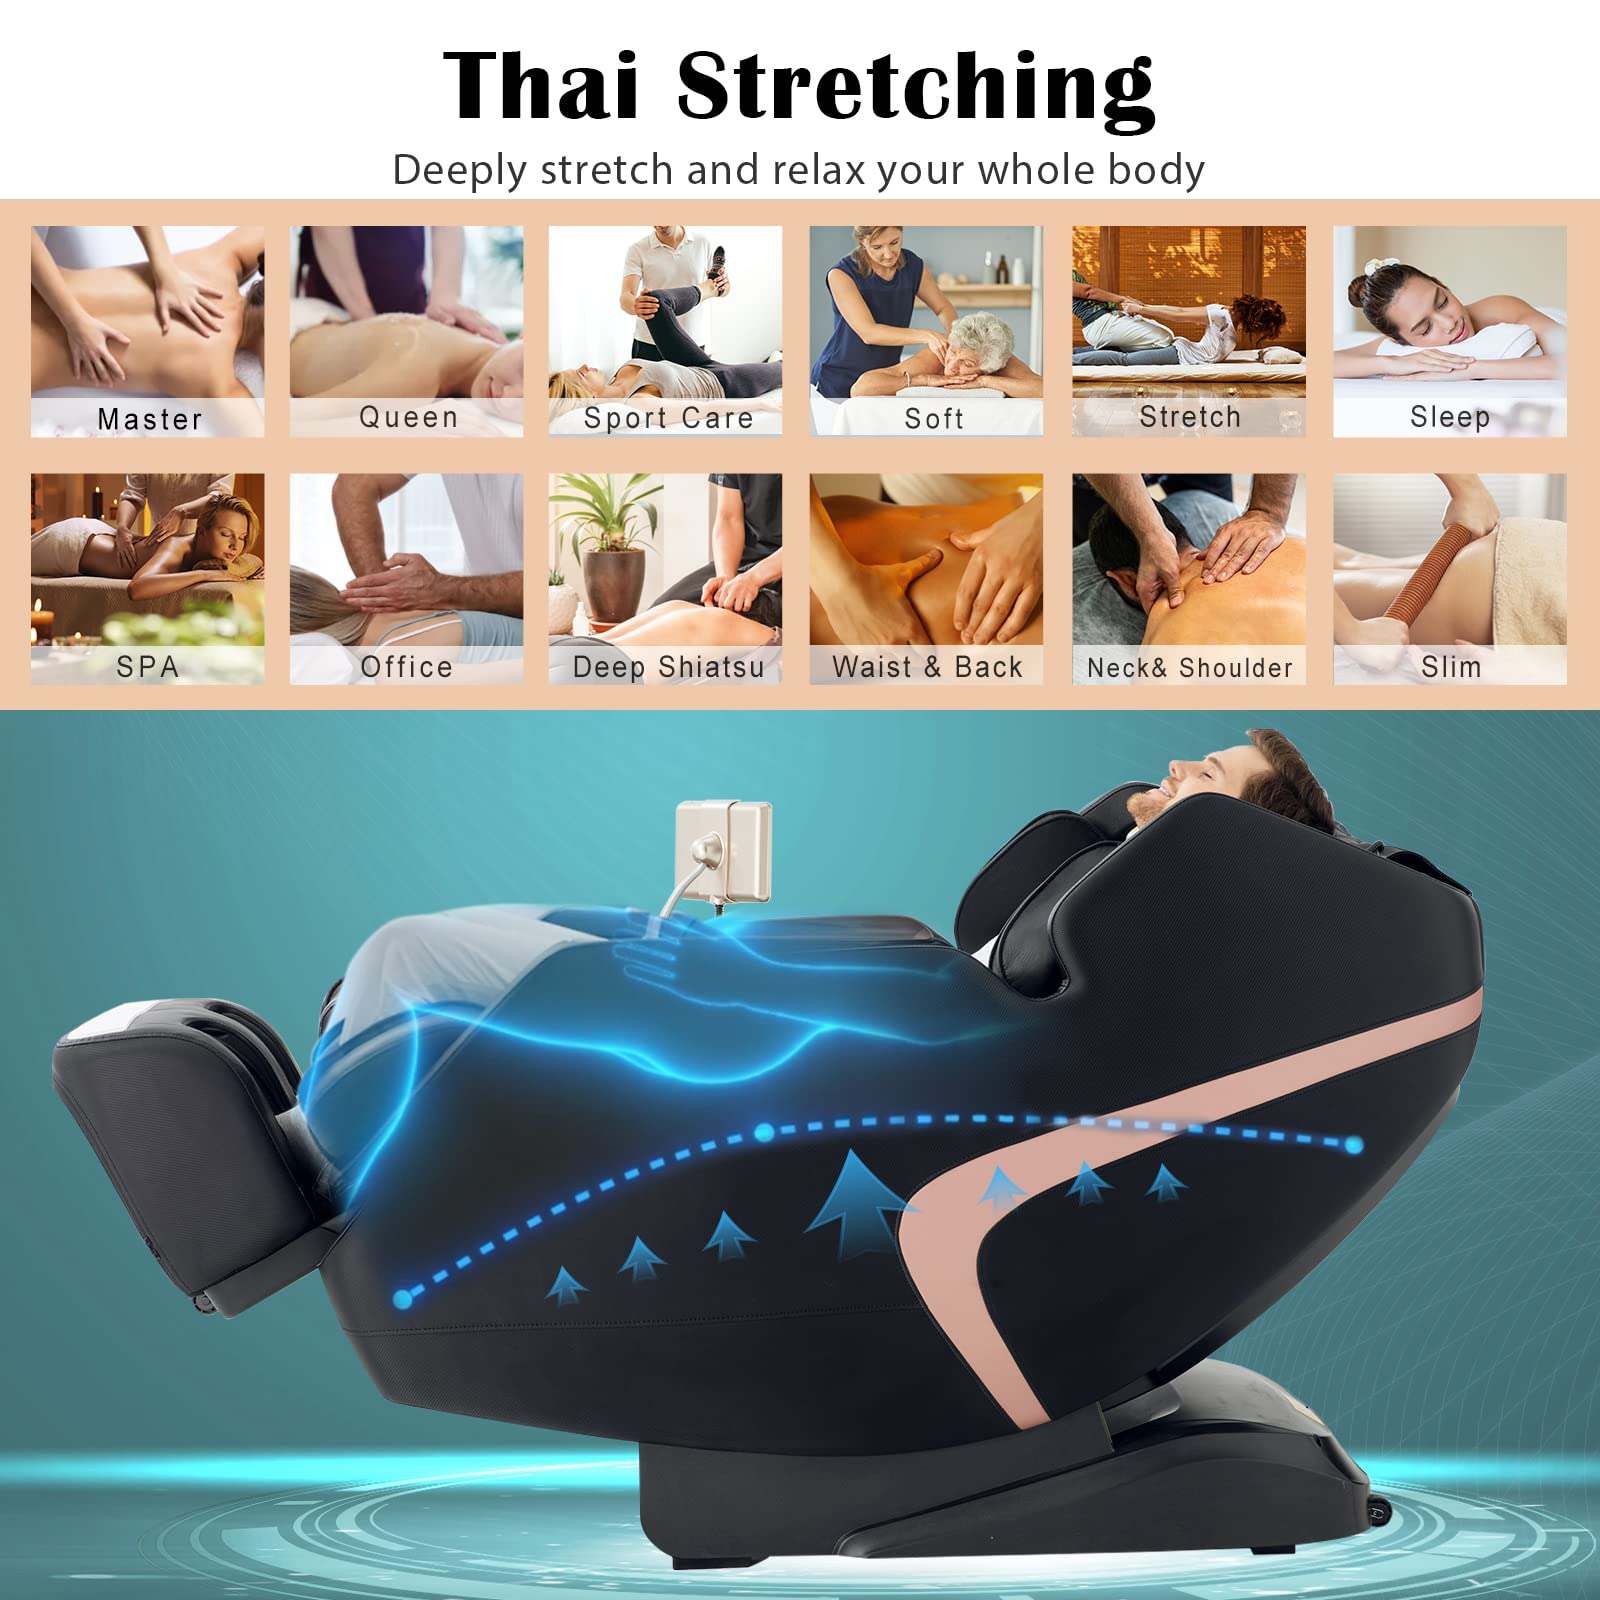 Giantex 3D Full Body Massage Chair, Zero-Gravity Massage Recliner Chair w/ 7'' Touch Screen & SL Track